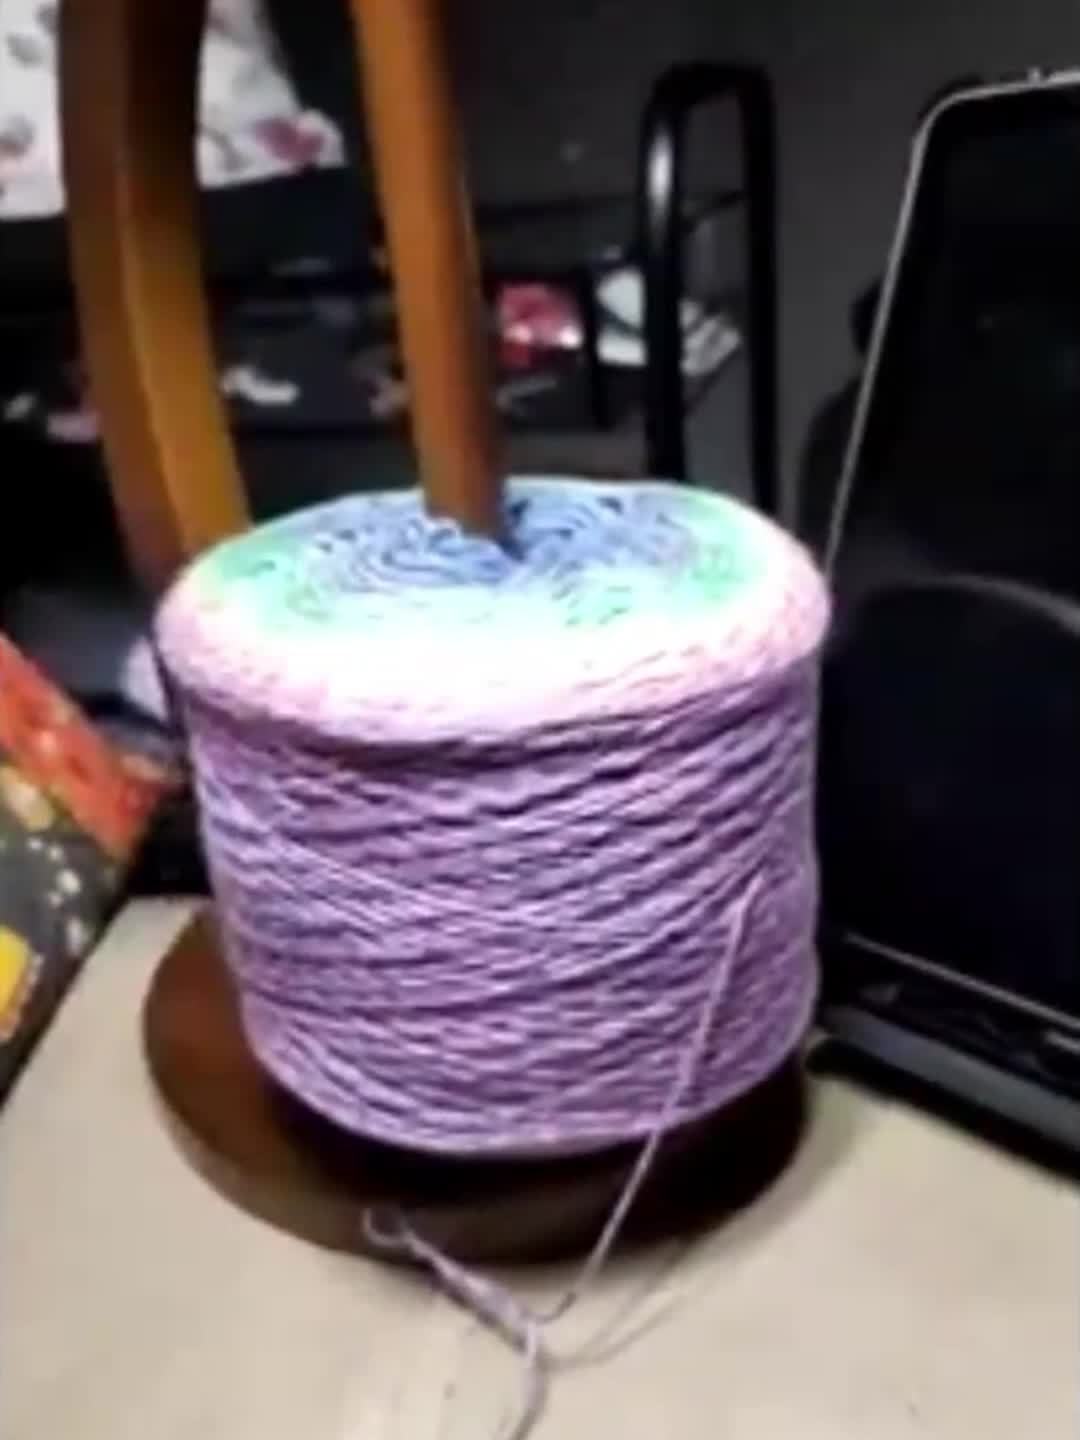 Yarn Holder for Knitting and Crocheting,Crochet Gift for Knitting  Lovers,Wooden Yarn Spinner for Crochet by Artowell (Walnut Color)